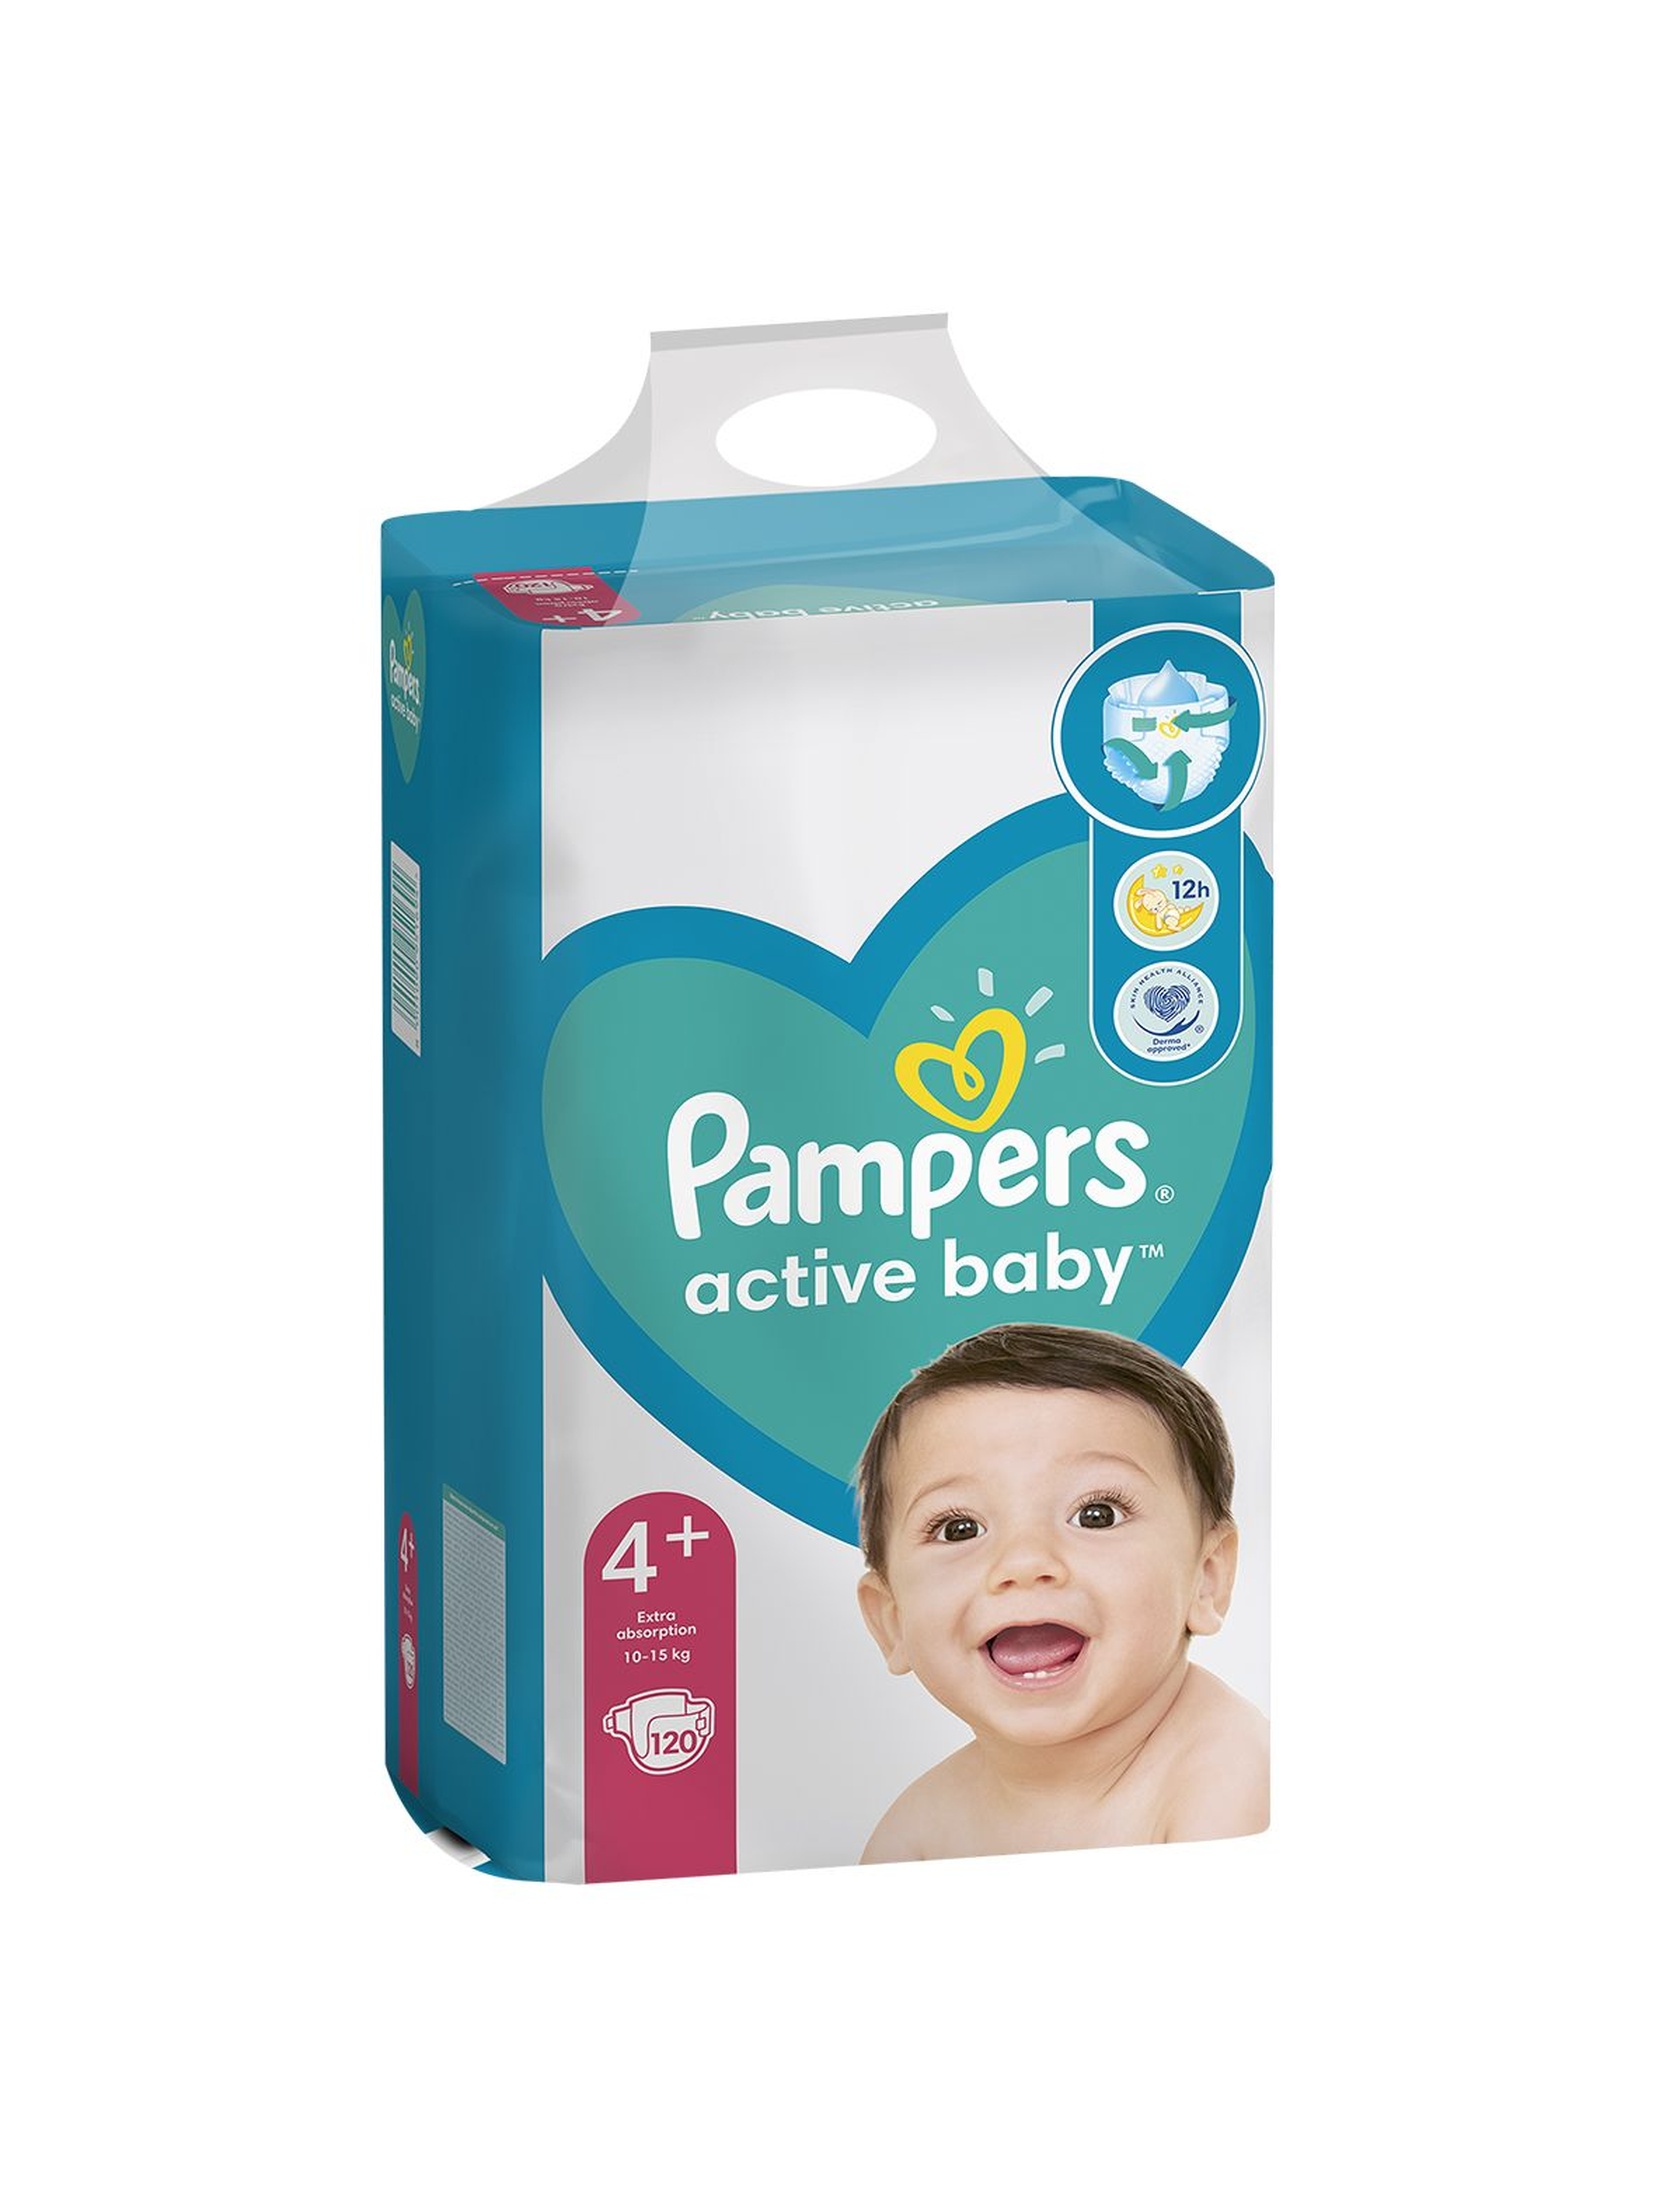 Pampers Active Baby, rozmiar 4+, 120 pieluszek, 10-15kg